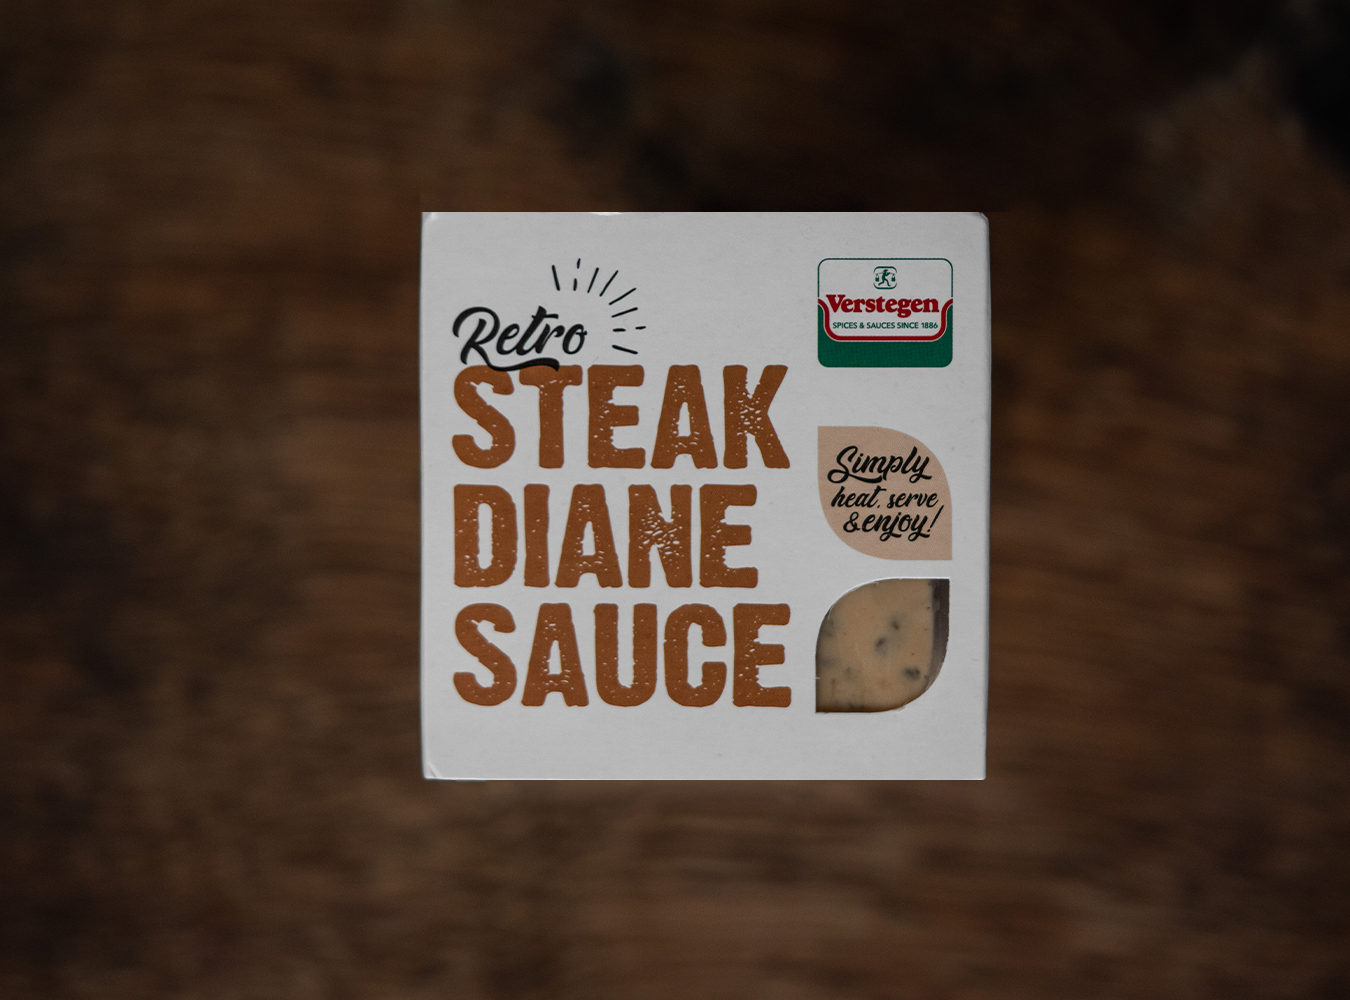 Steak Diane Sauce